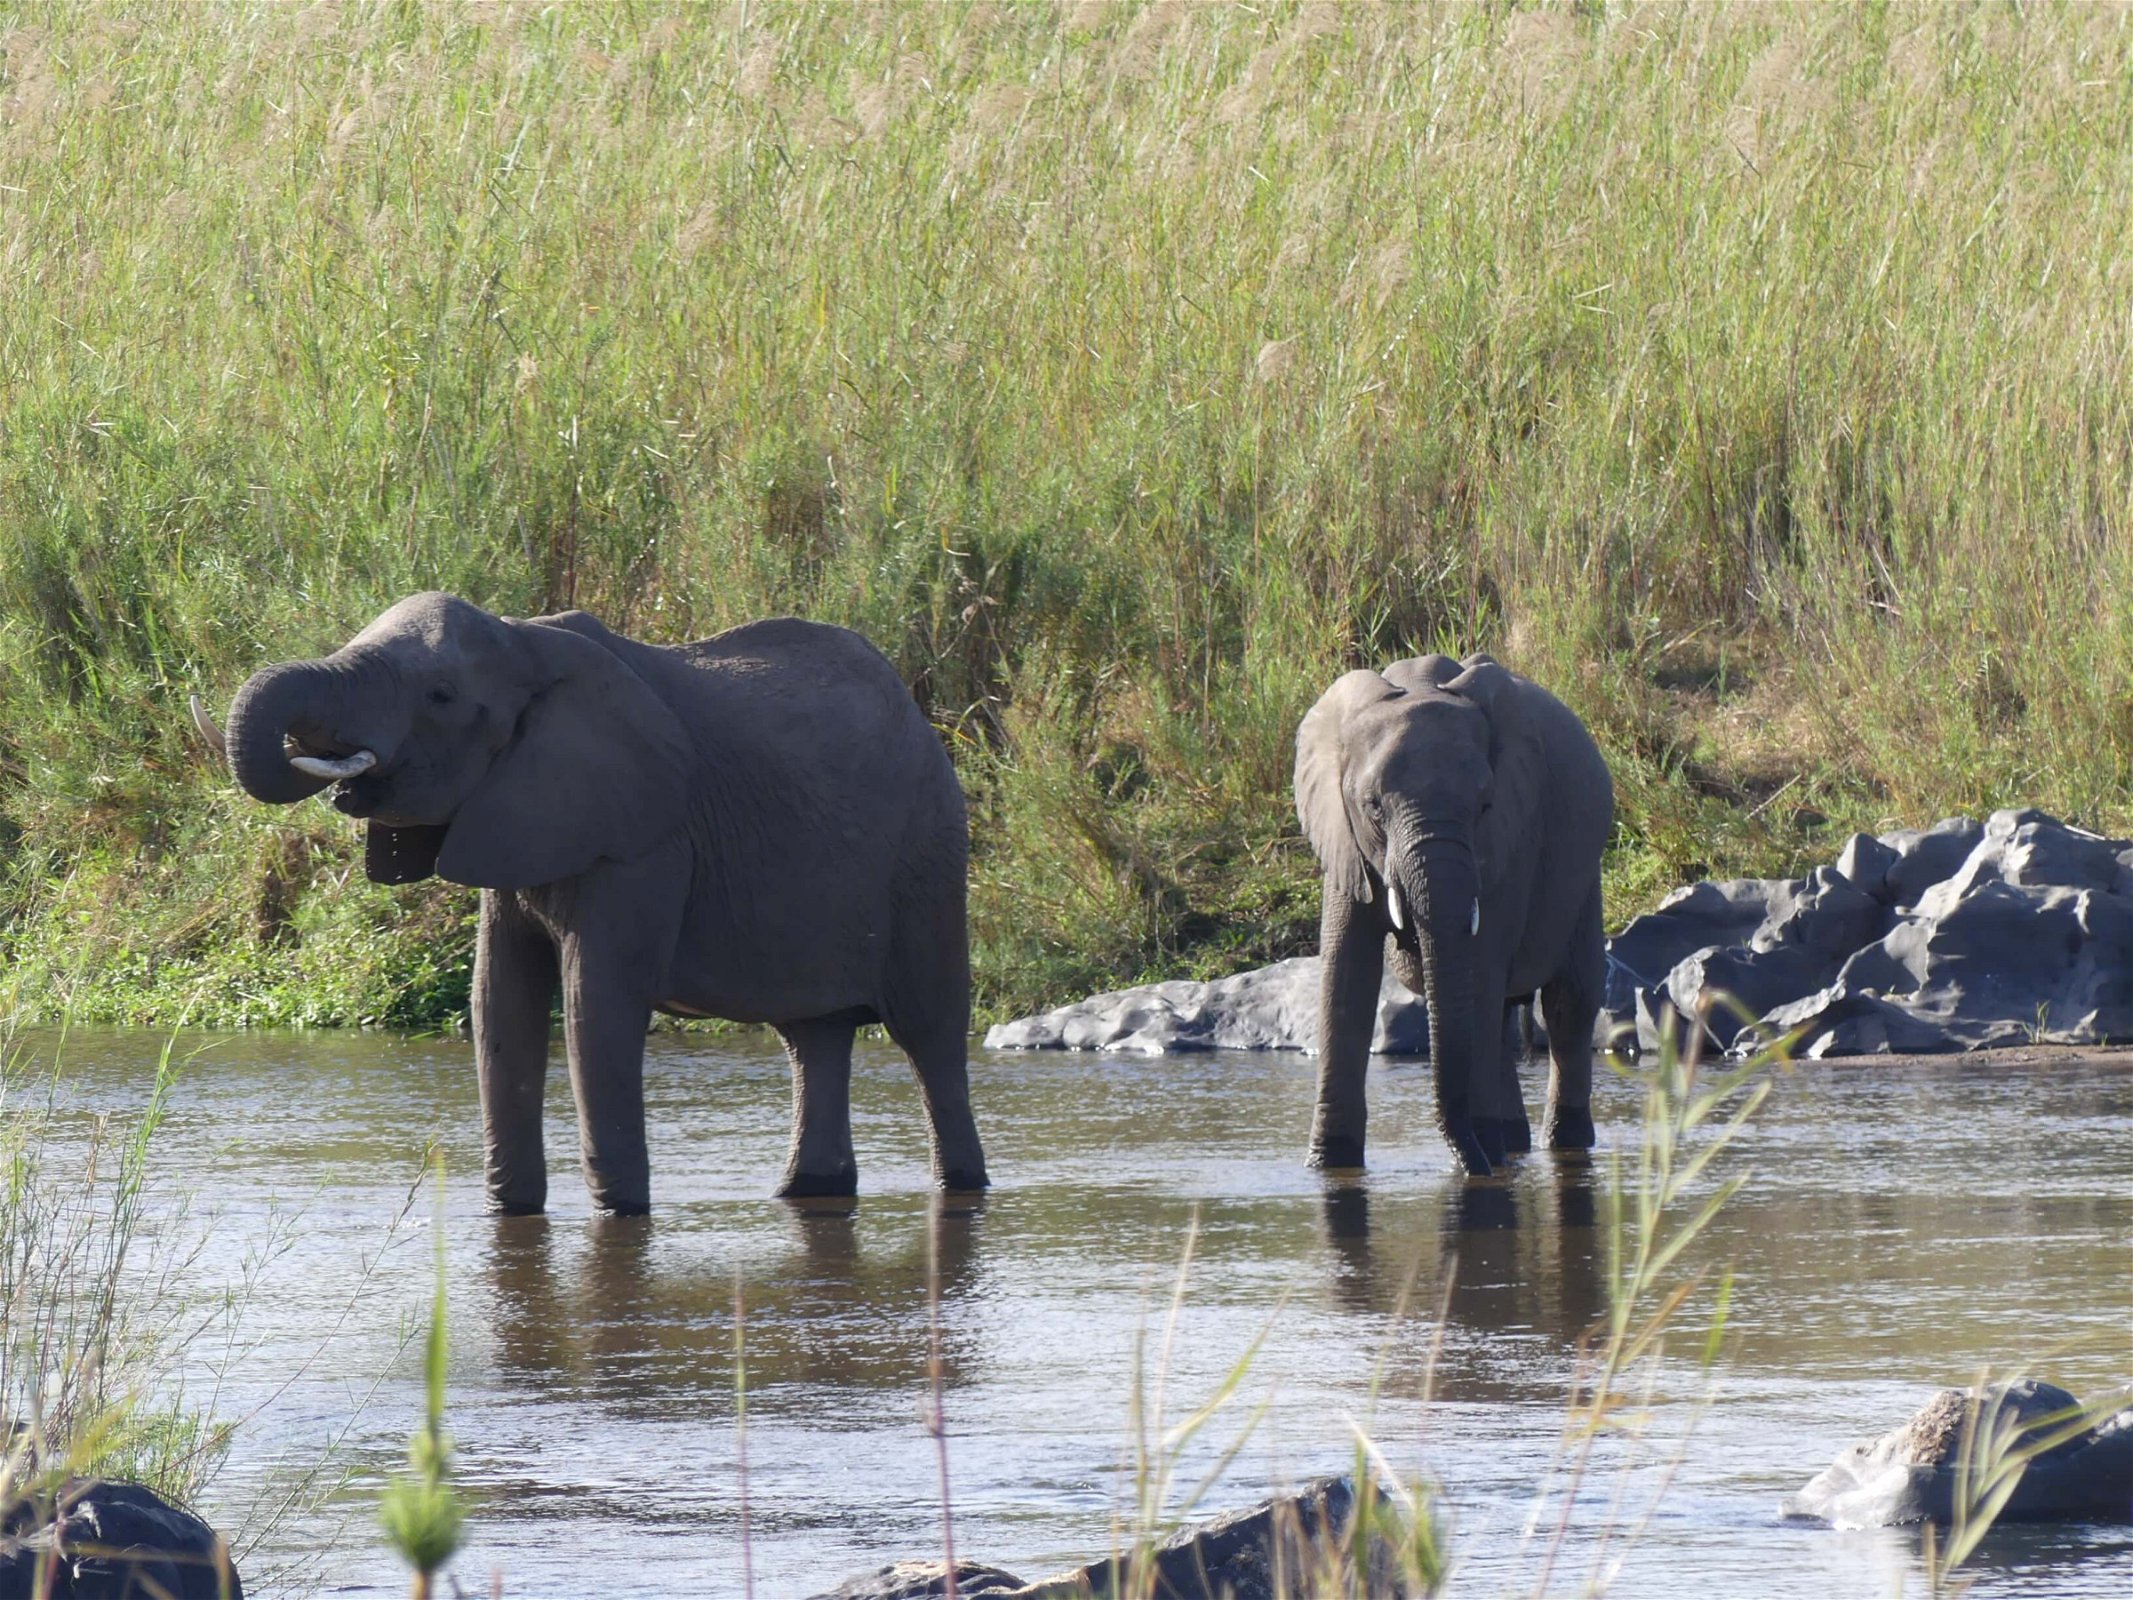 zuid-afrika-wandelsafari-in-het-krugerpark-olifanten-dichtbij